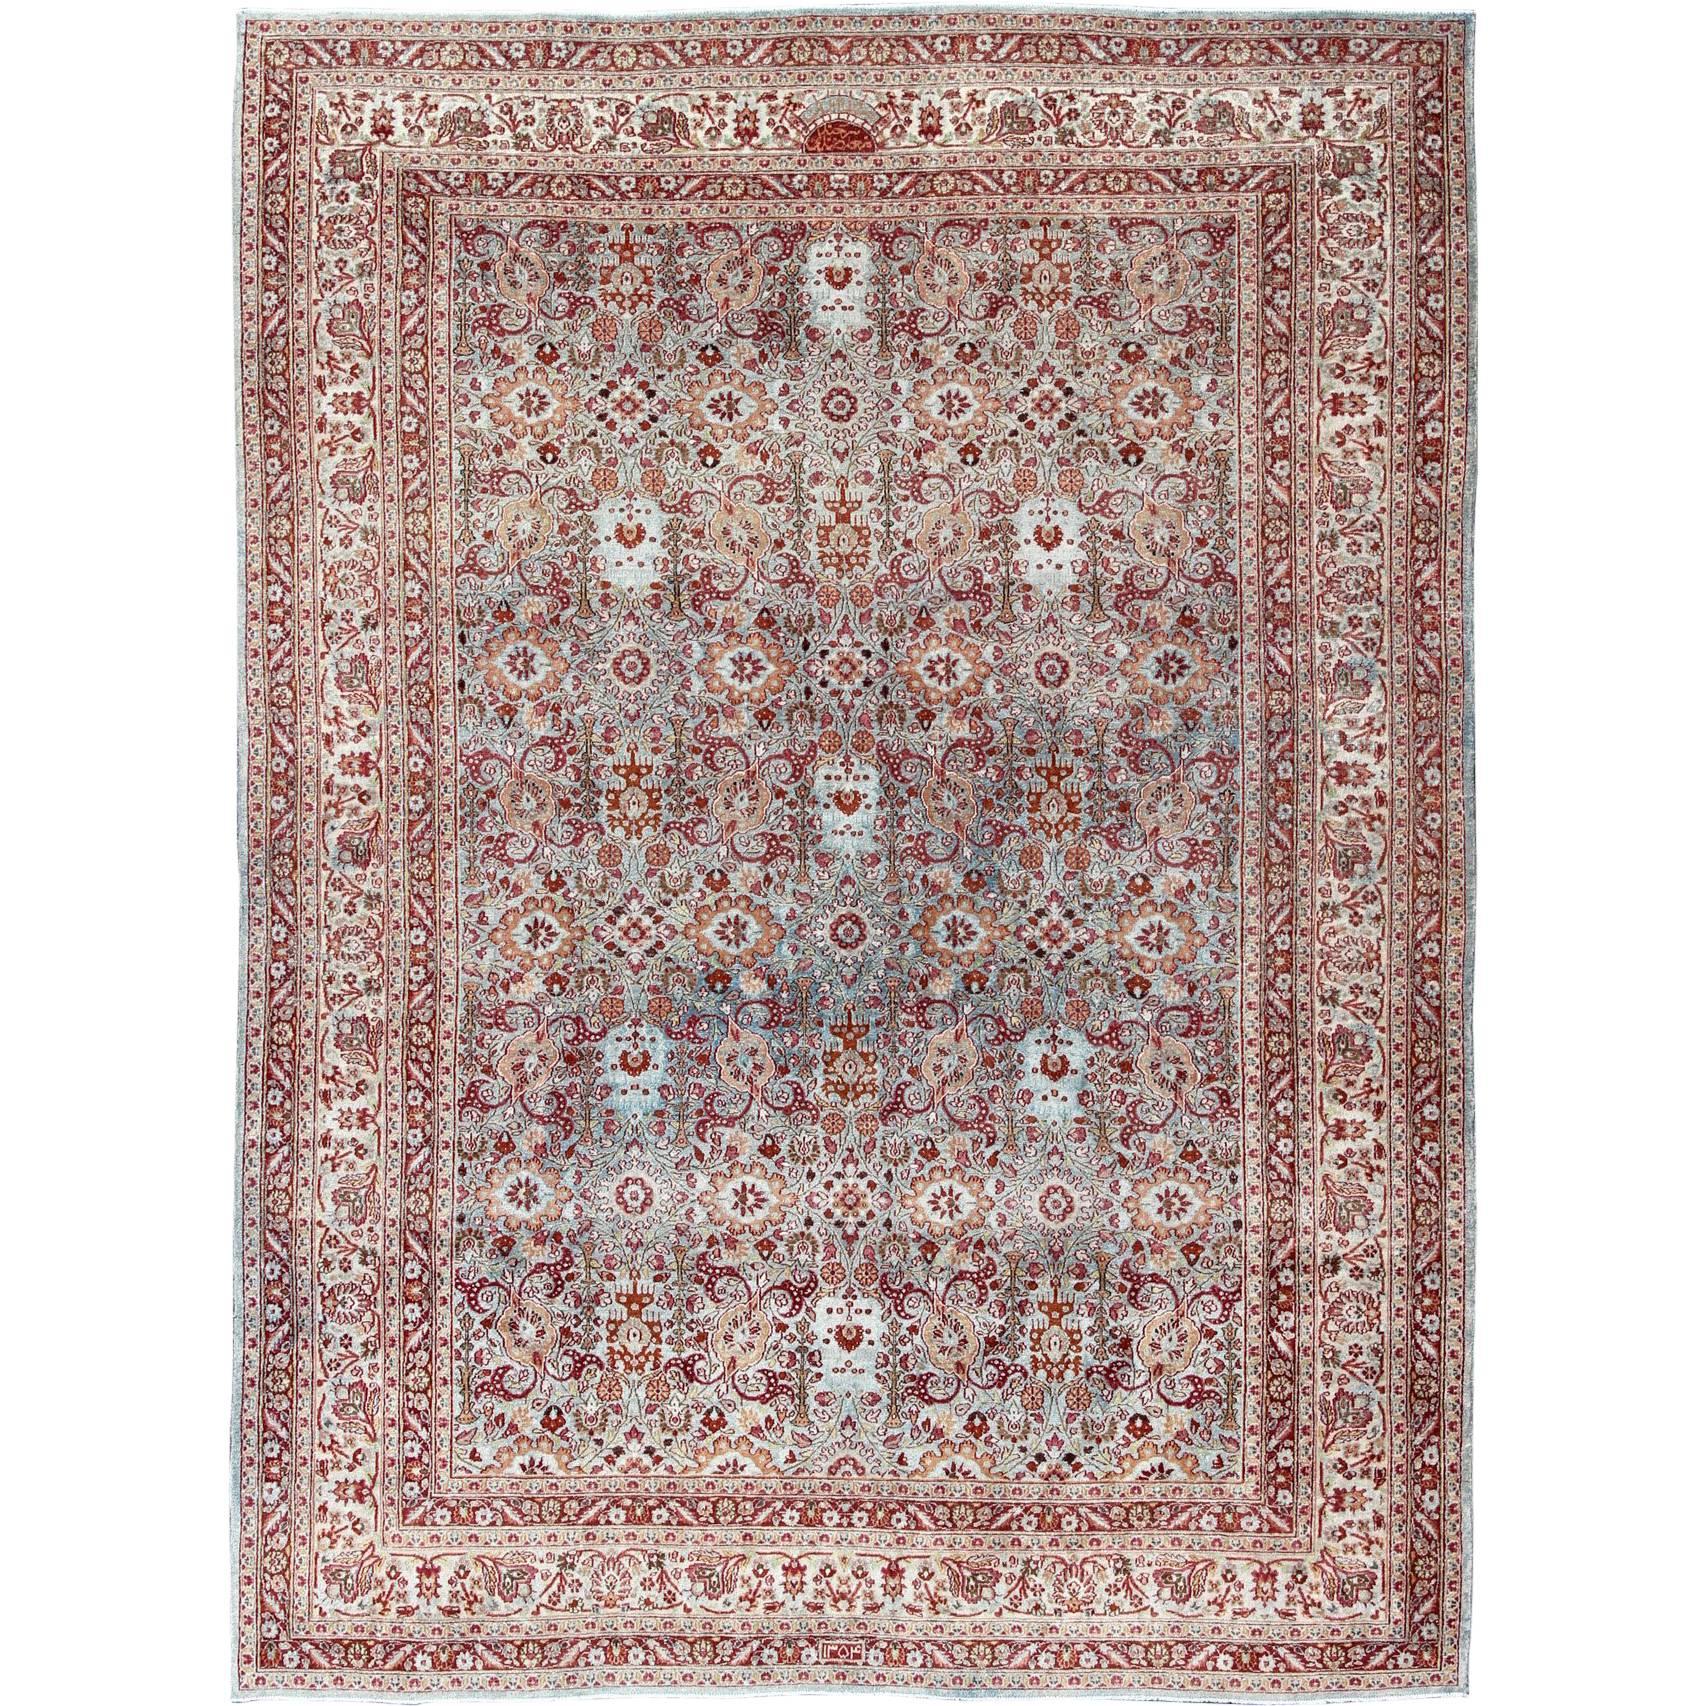 Ornate Floral Pattern Khorassan Antique Persian Rug in Burgundy & Gray For Sale